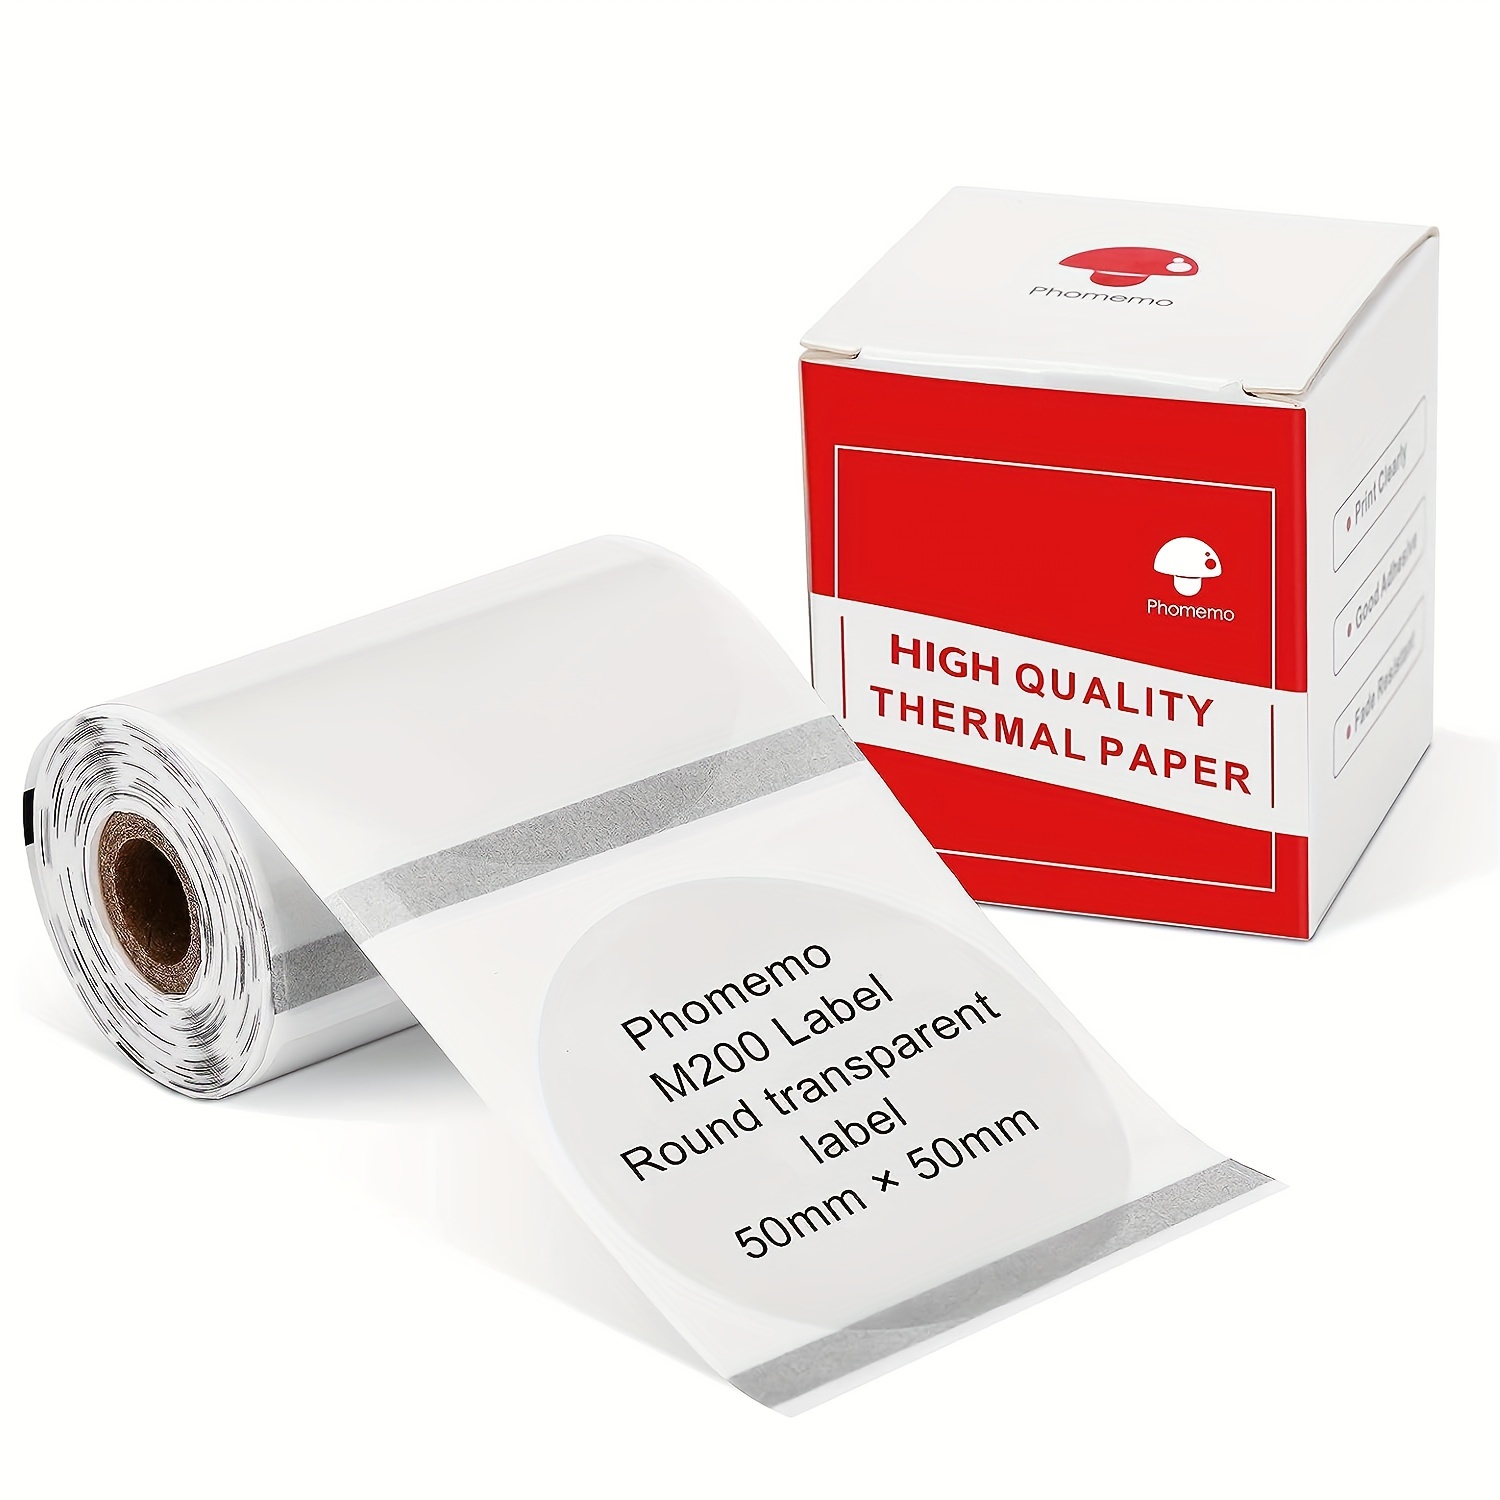  Phomemo M110 Label Printer Paper, White Square Self-Adhesive  Thermal Paper, Thermal Labels Compatible with M110 M120 M200 M220 Label  Printer, Black on White, 1.18 x 0.79 (30x20mm), 320 Labels/Roll 